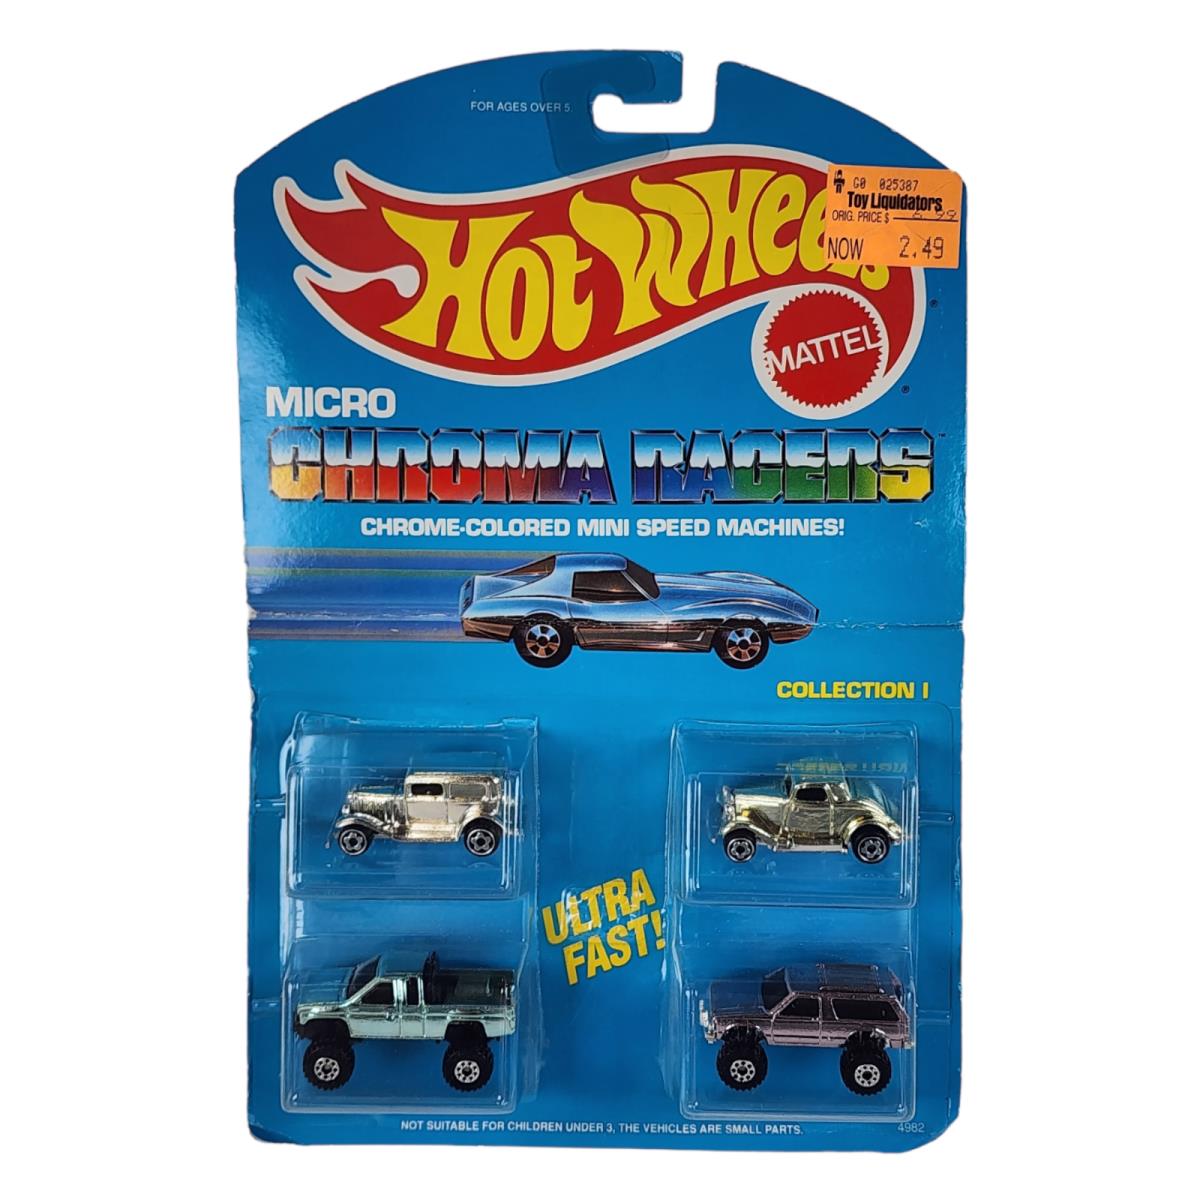 Mattel Hot Wheels Mini Micro Chroma Racers Collection I Moc 1989